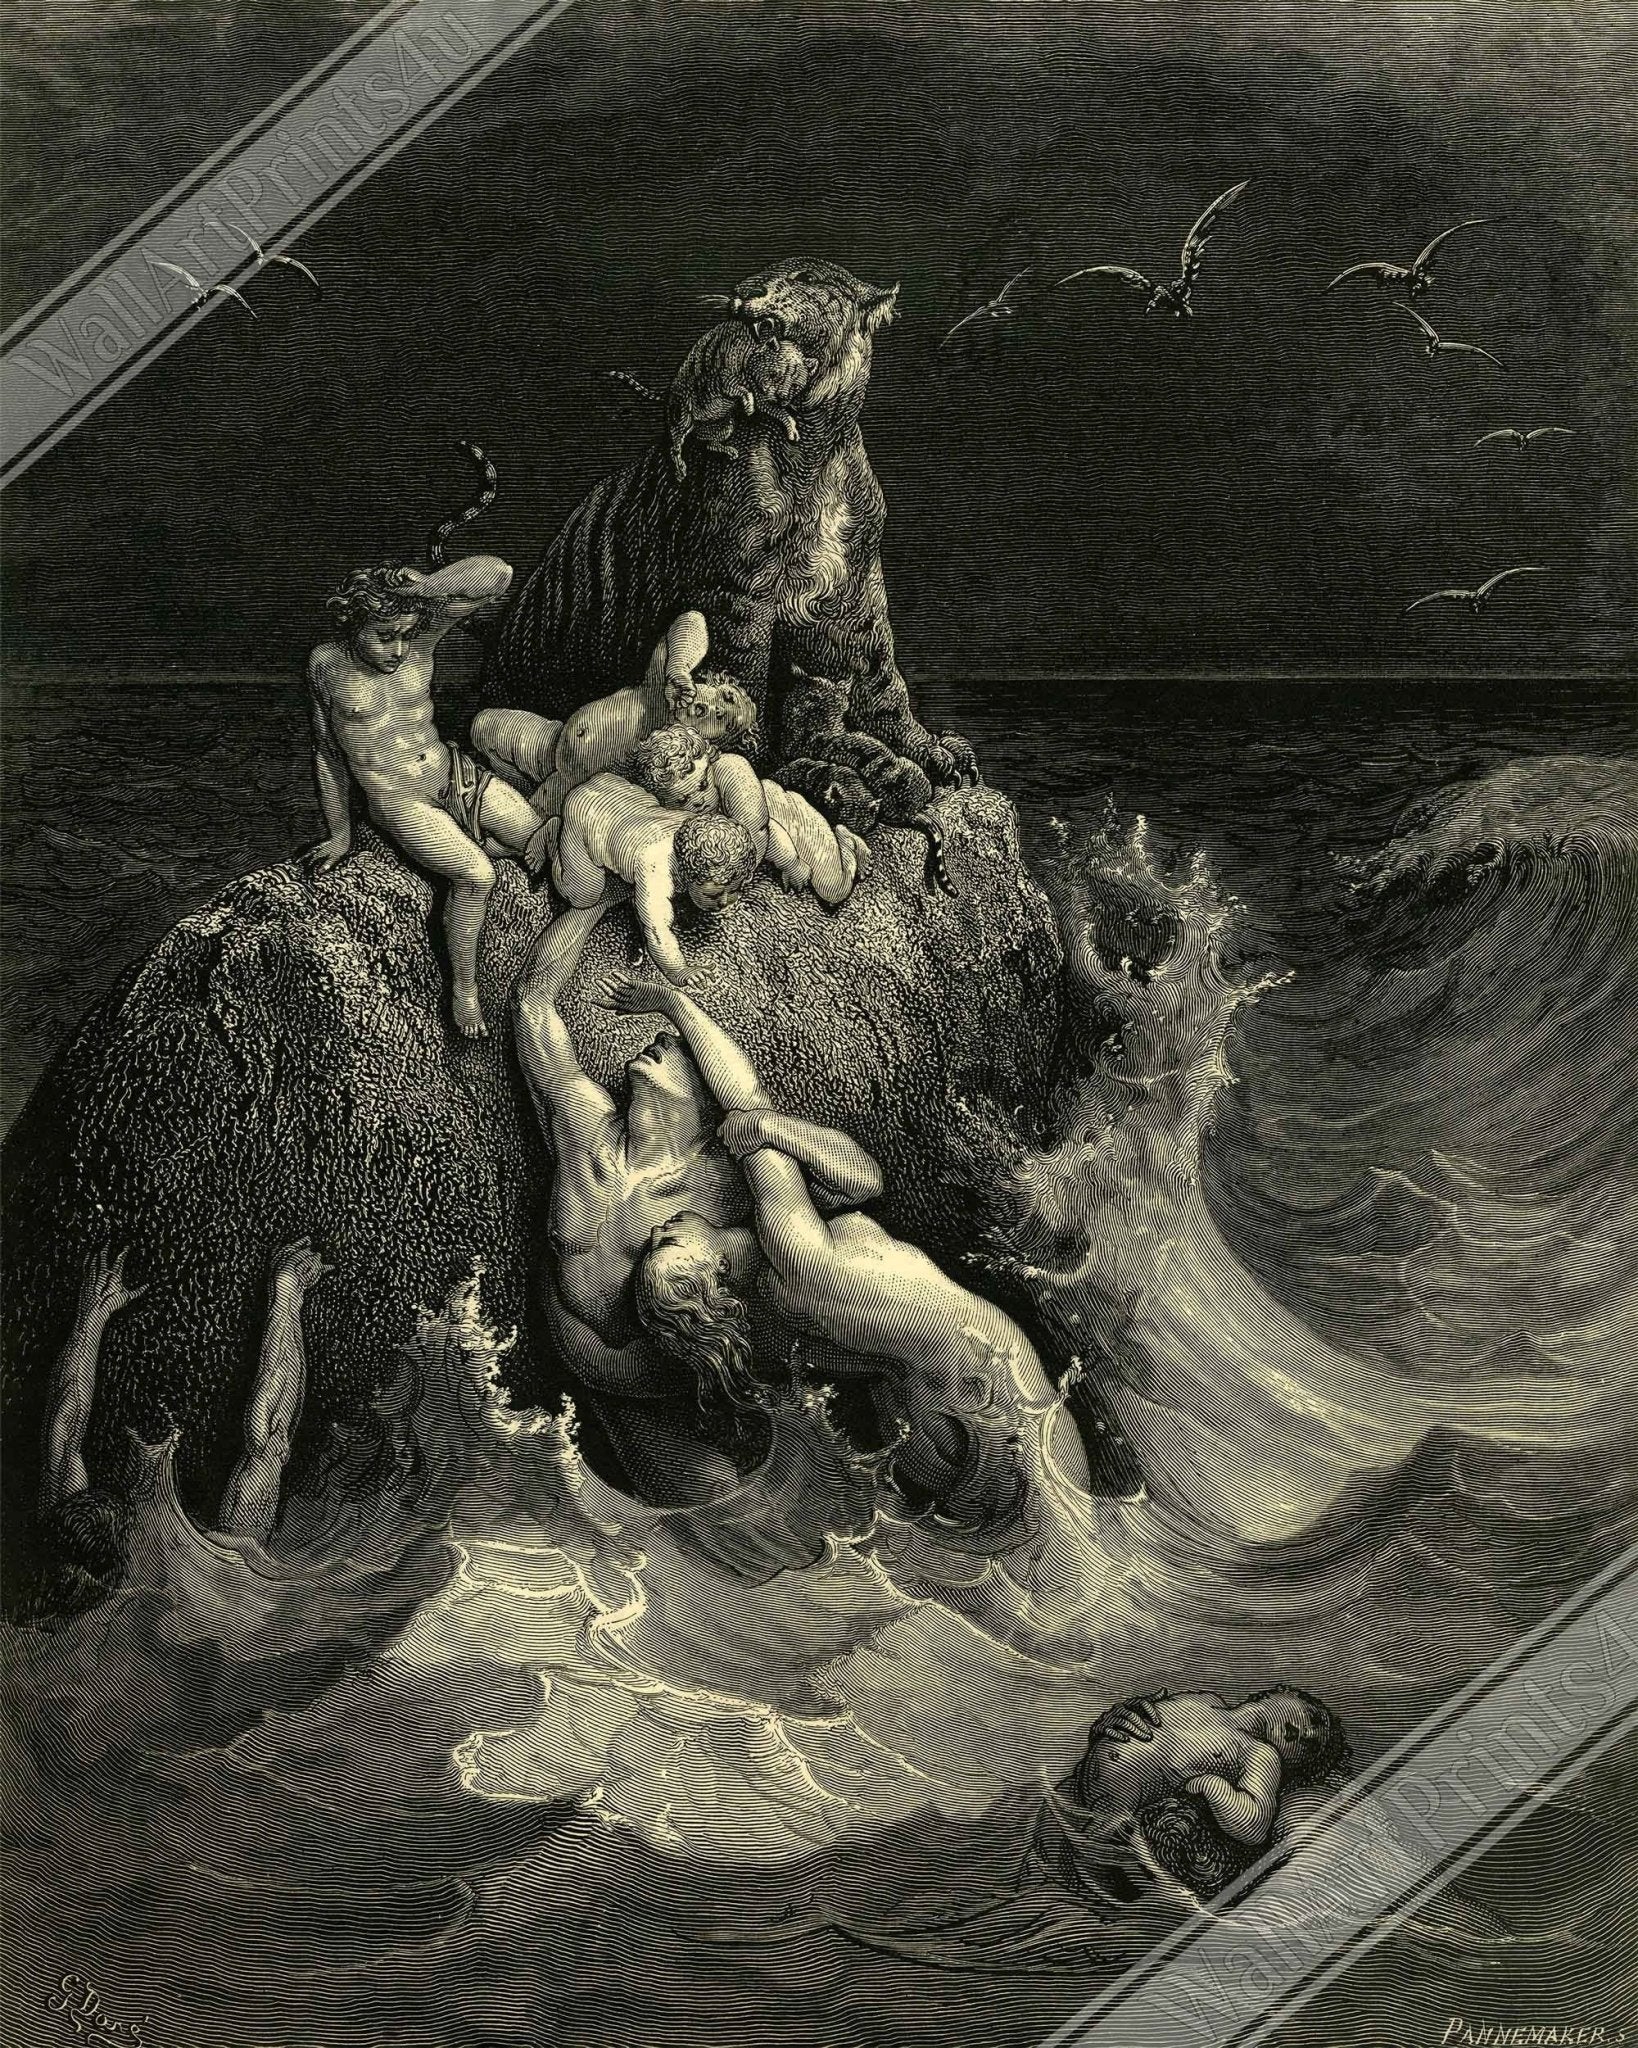 Gustave Dore Poster, The Deluge Print, From La Grand Bible De Tours 1866 - WallArtPrints4U